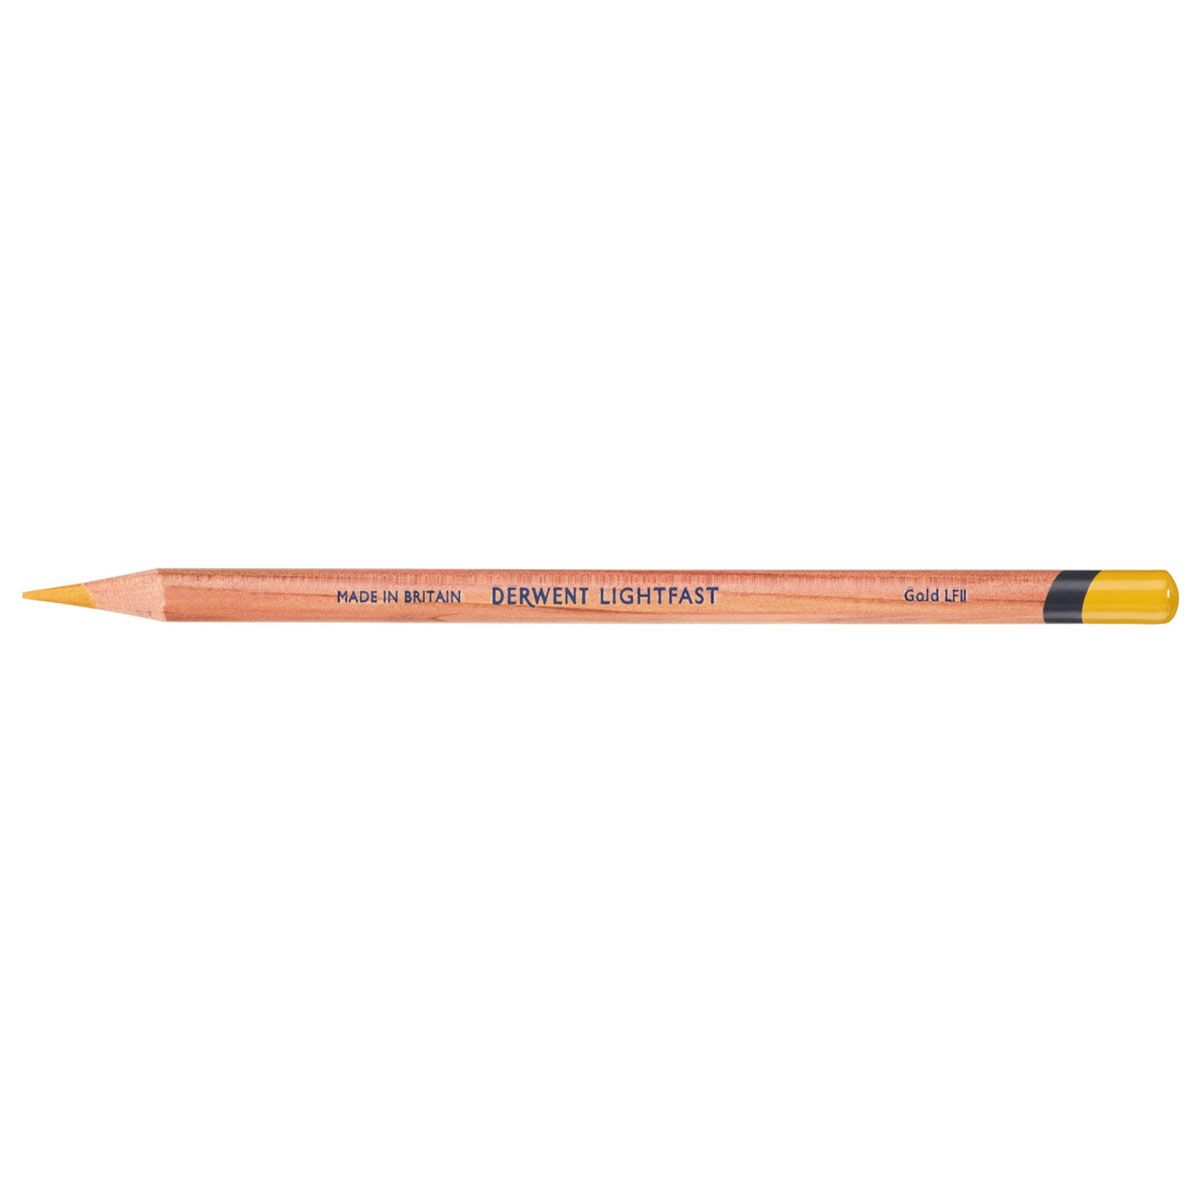 Derwent Lightfast Pencil Colour: Gold